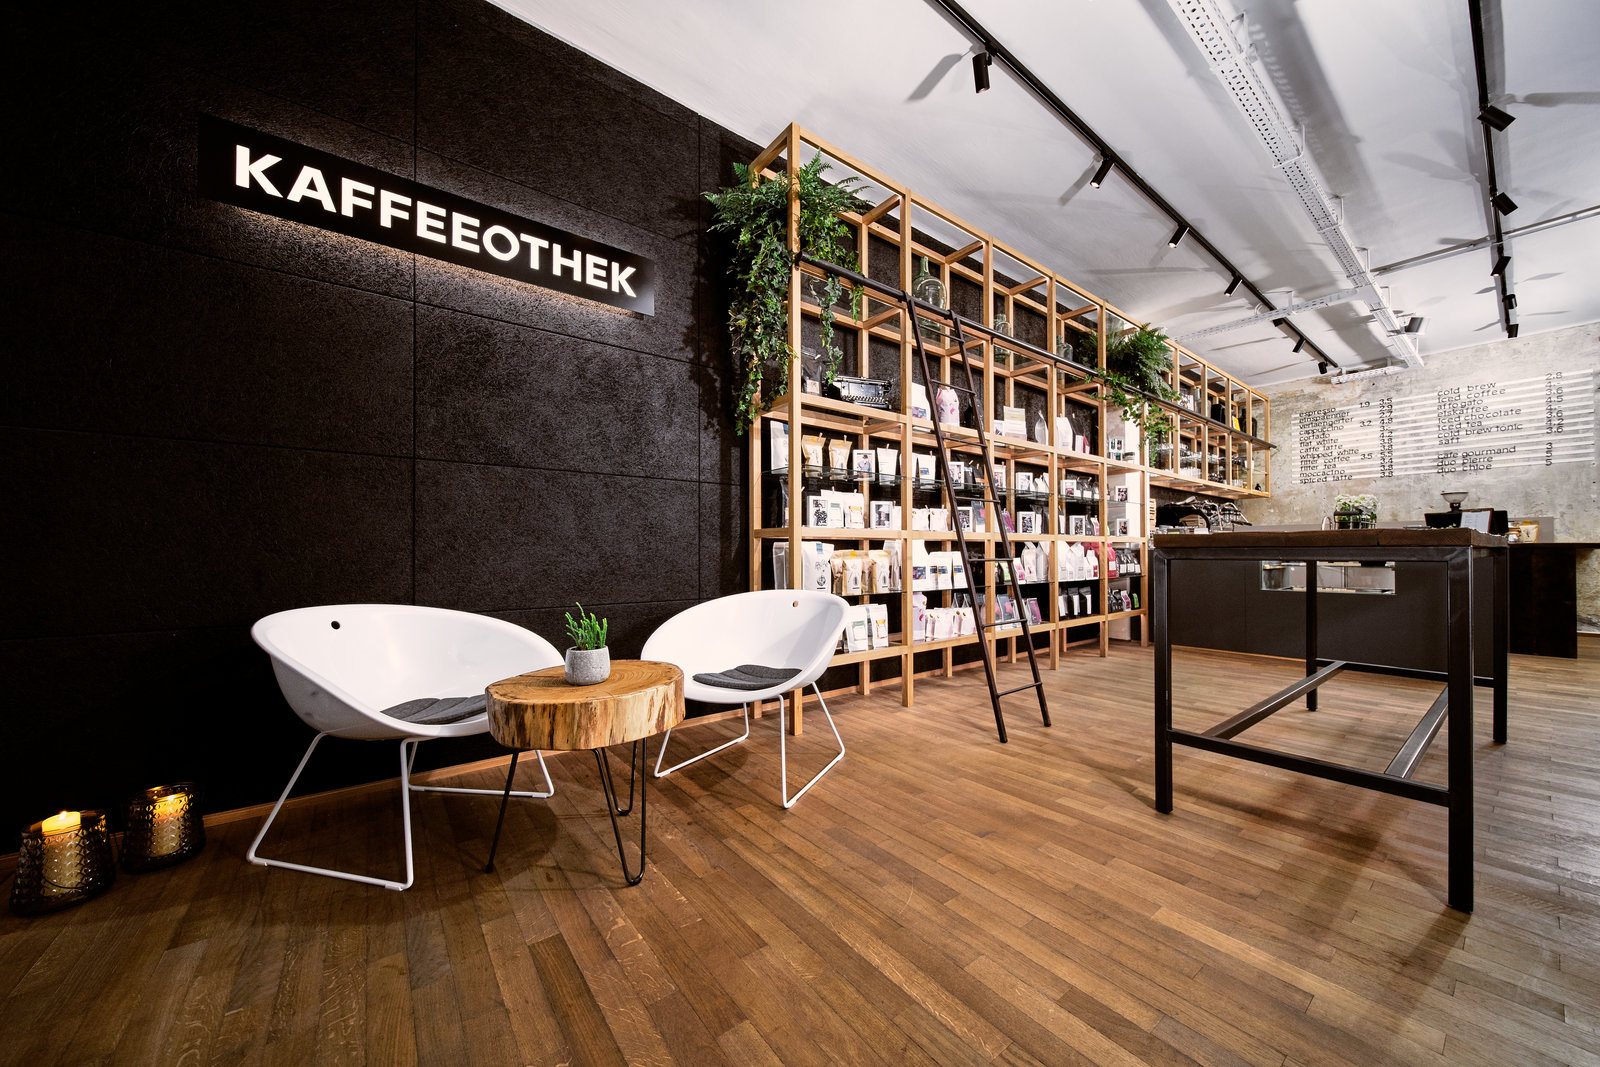 Kaffeeothek 